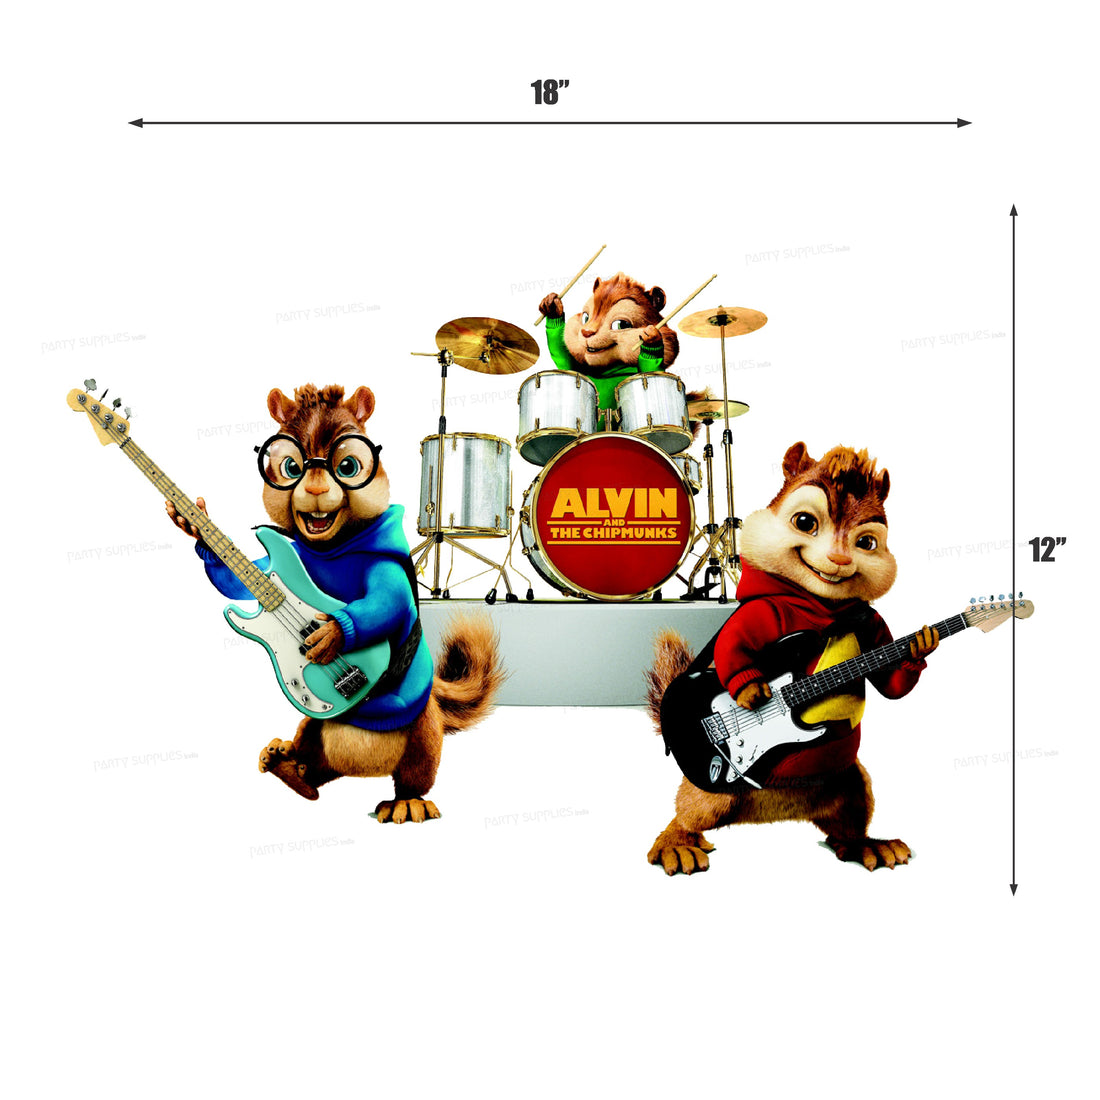 PSI Alvin and Chipmunks Theme Cutout - 13